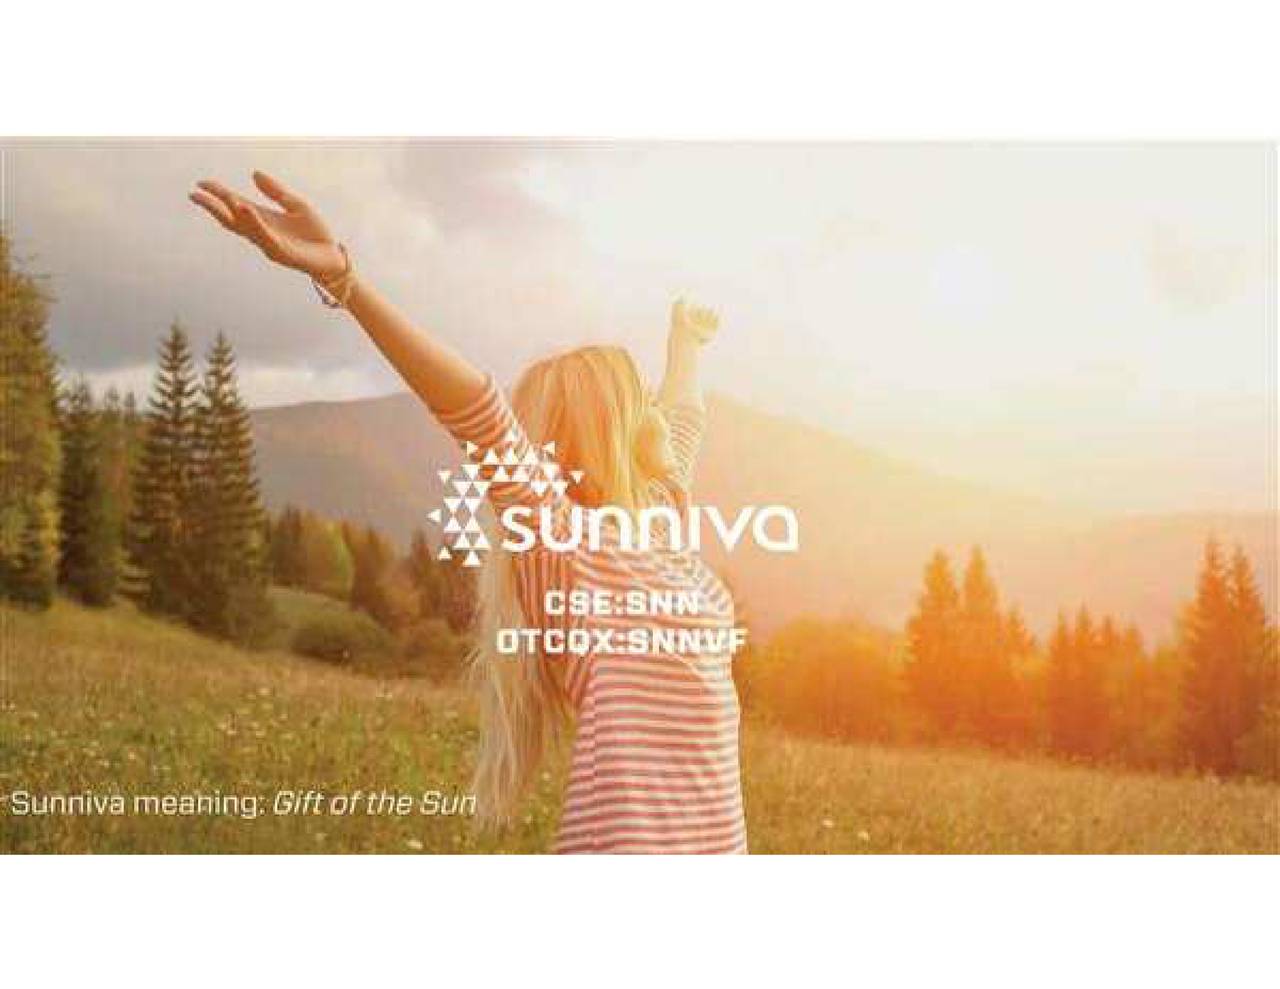 SNNVF Stock News and Price / Sunniva Inc - Stock Price Quote and News - Fintel.io1280 x 989